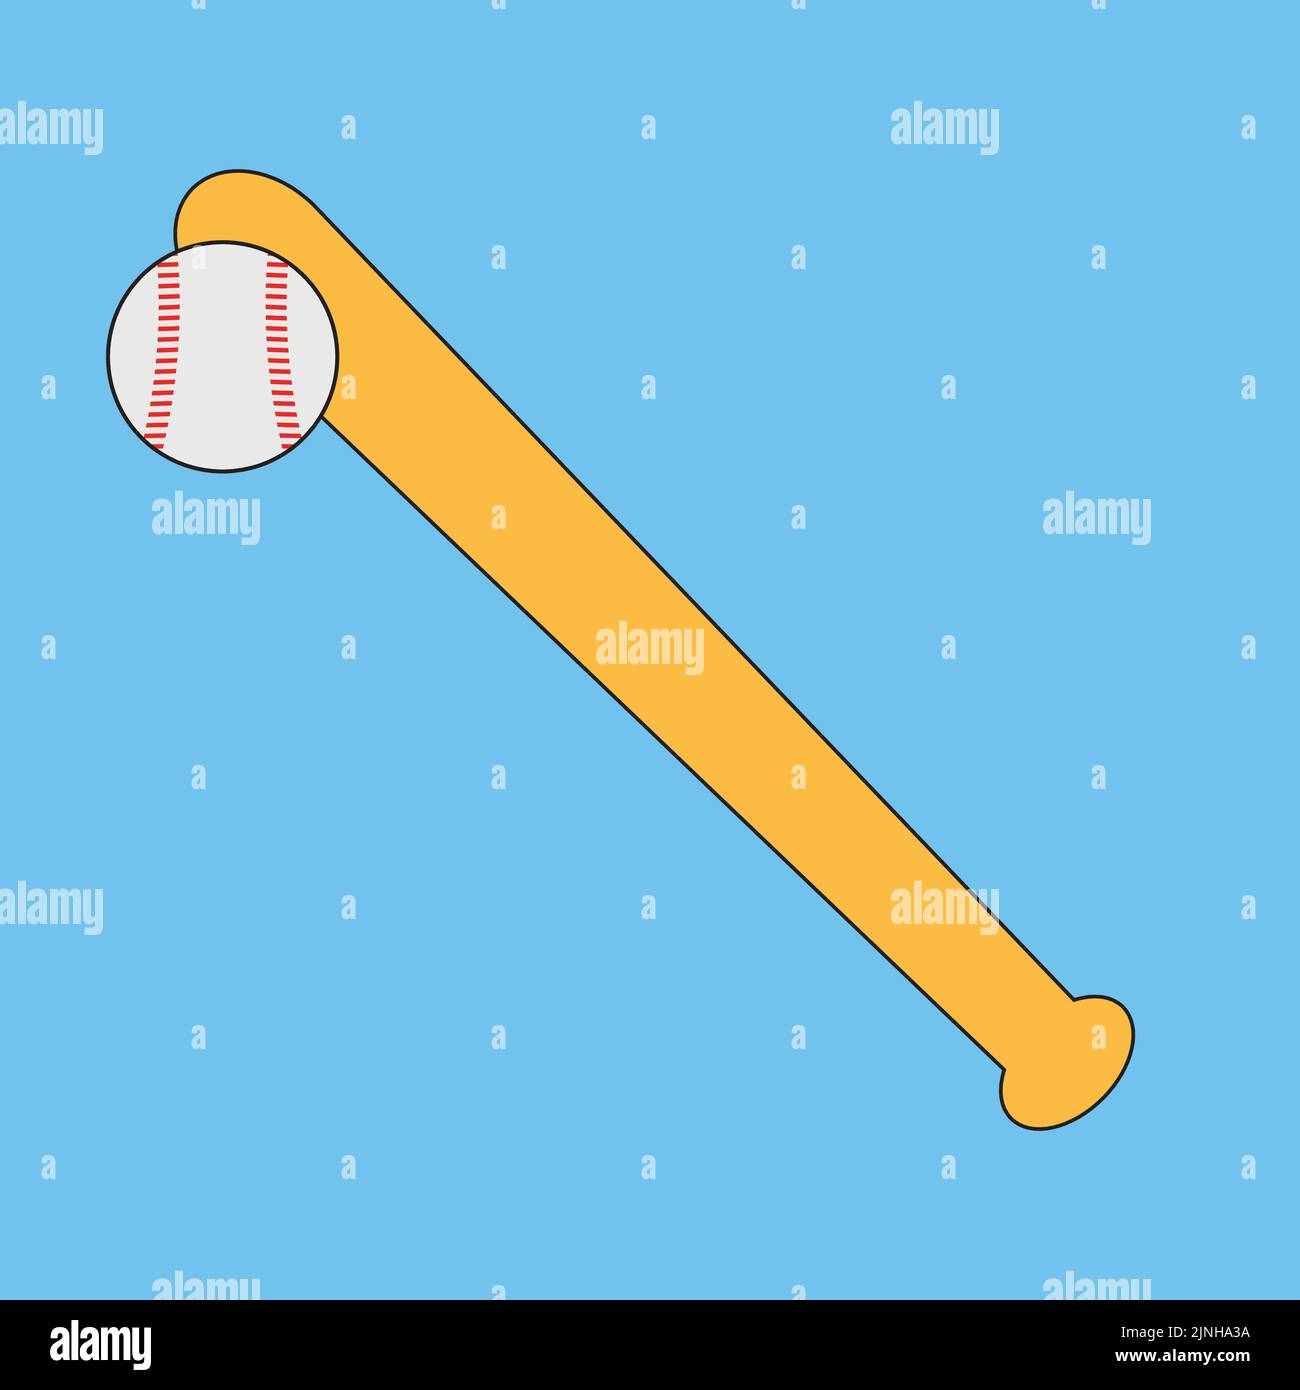 Baseball bat and ball icon - vector illustration Stock Vector